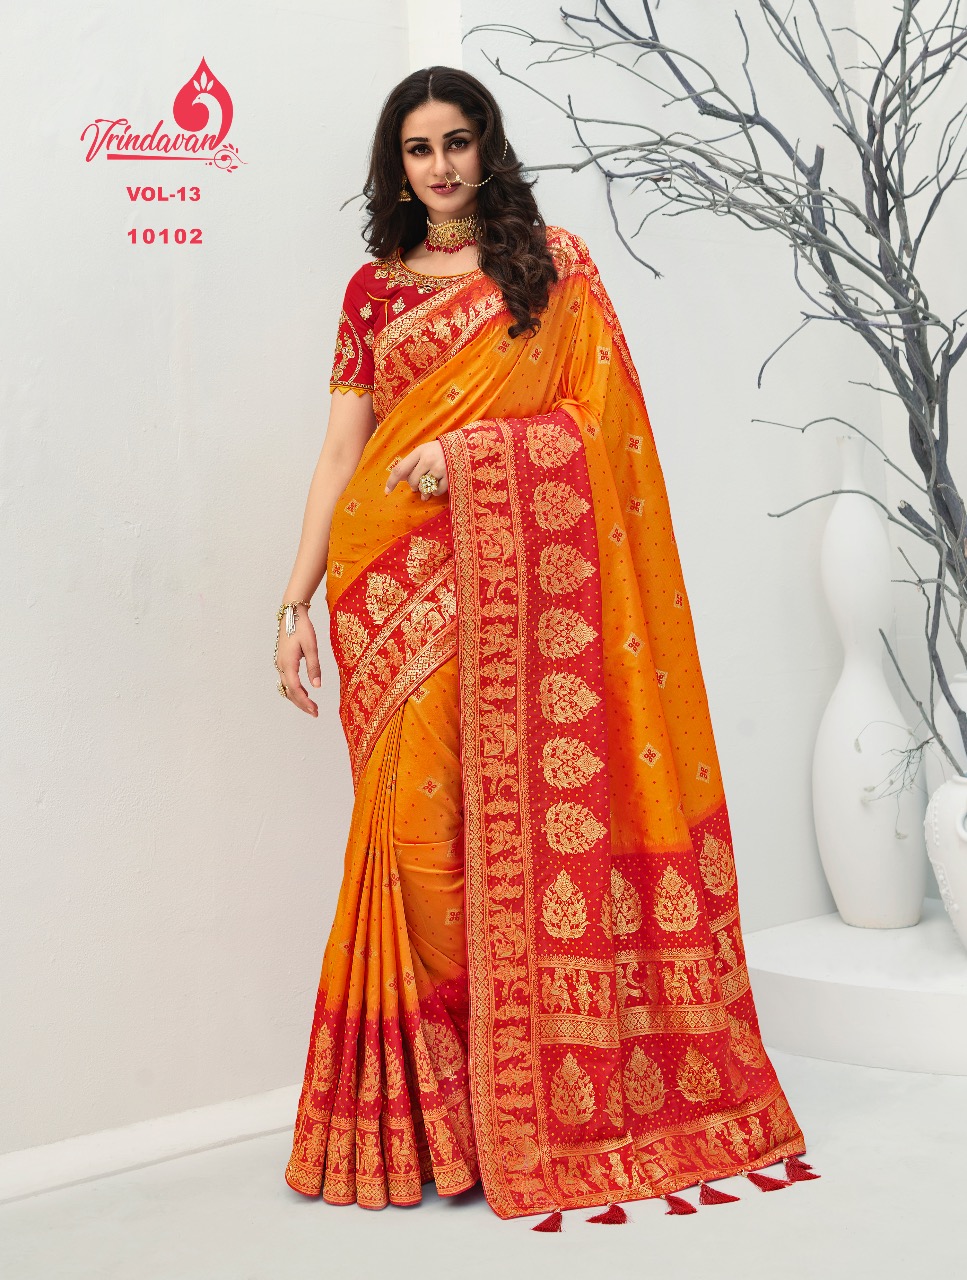 Royal Presents Vrindavan Vol-13 Wedding Wear Banarasi Silk Sarees With Heavy Blouse Collection At Wholesale Price